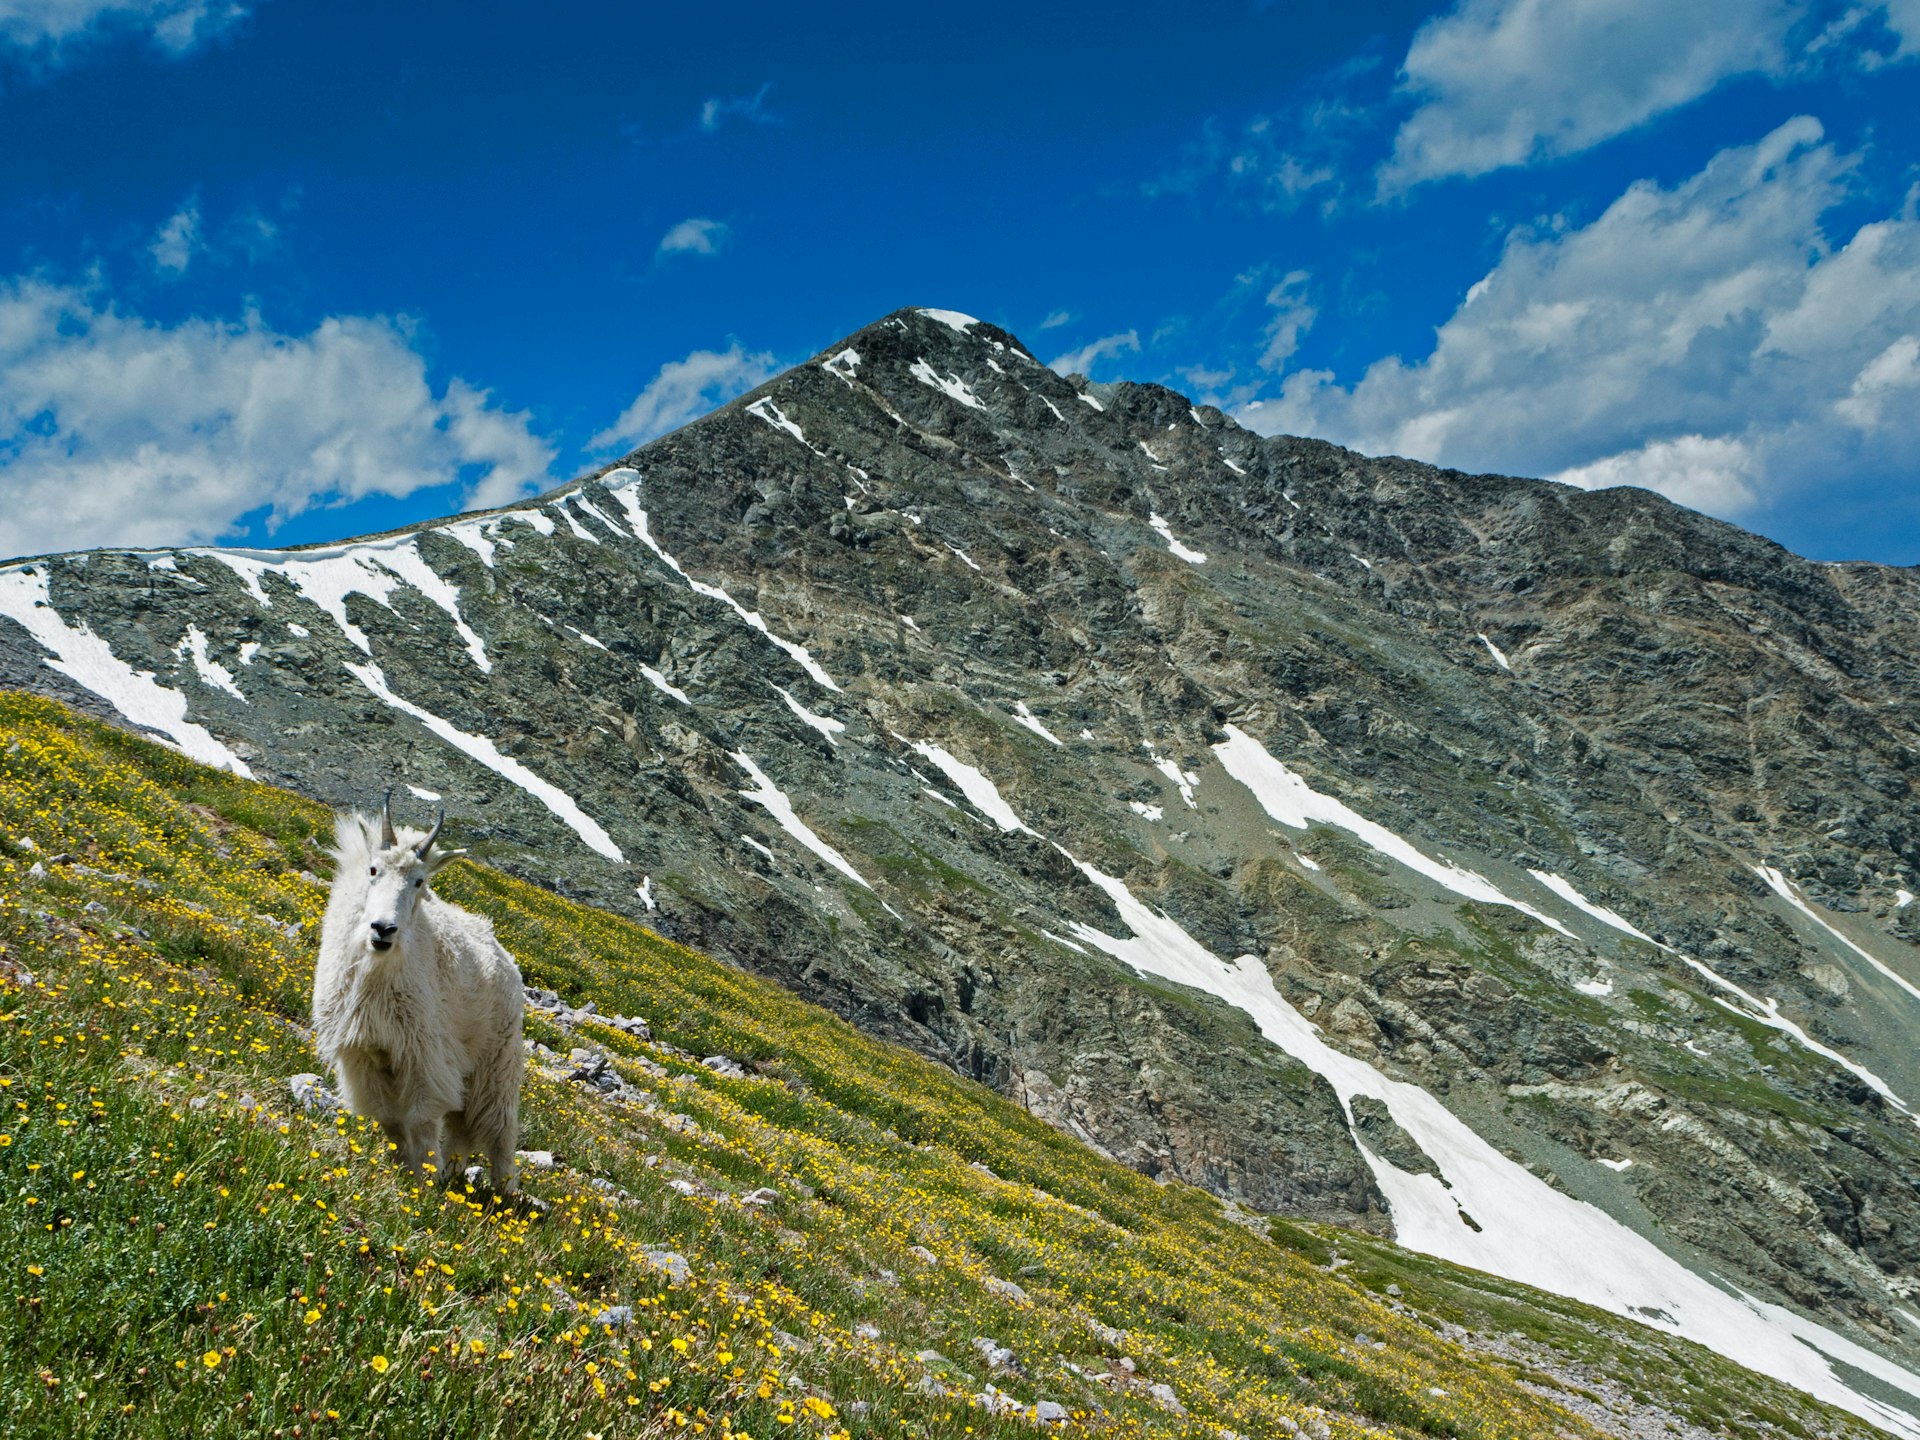 Goat grazing on wildflowers in front of Torreys Peak, Colorado